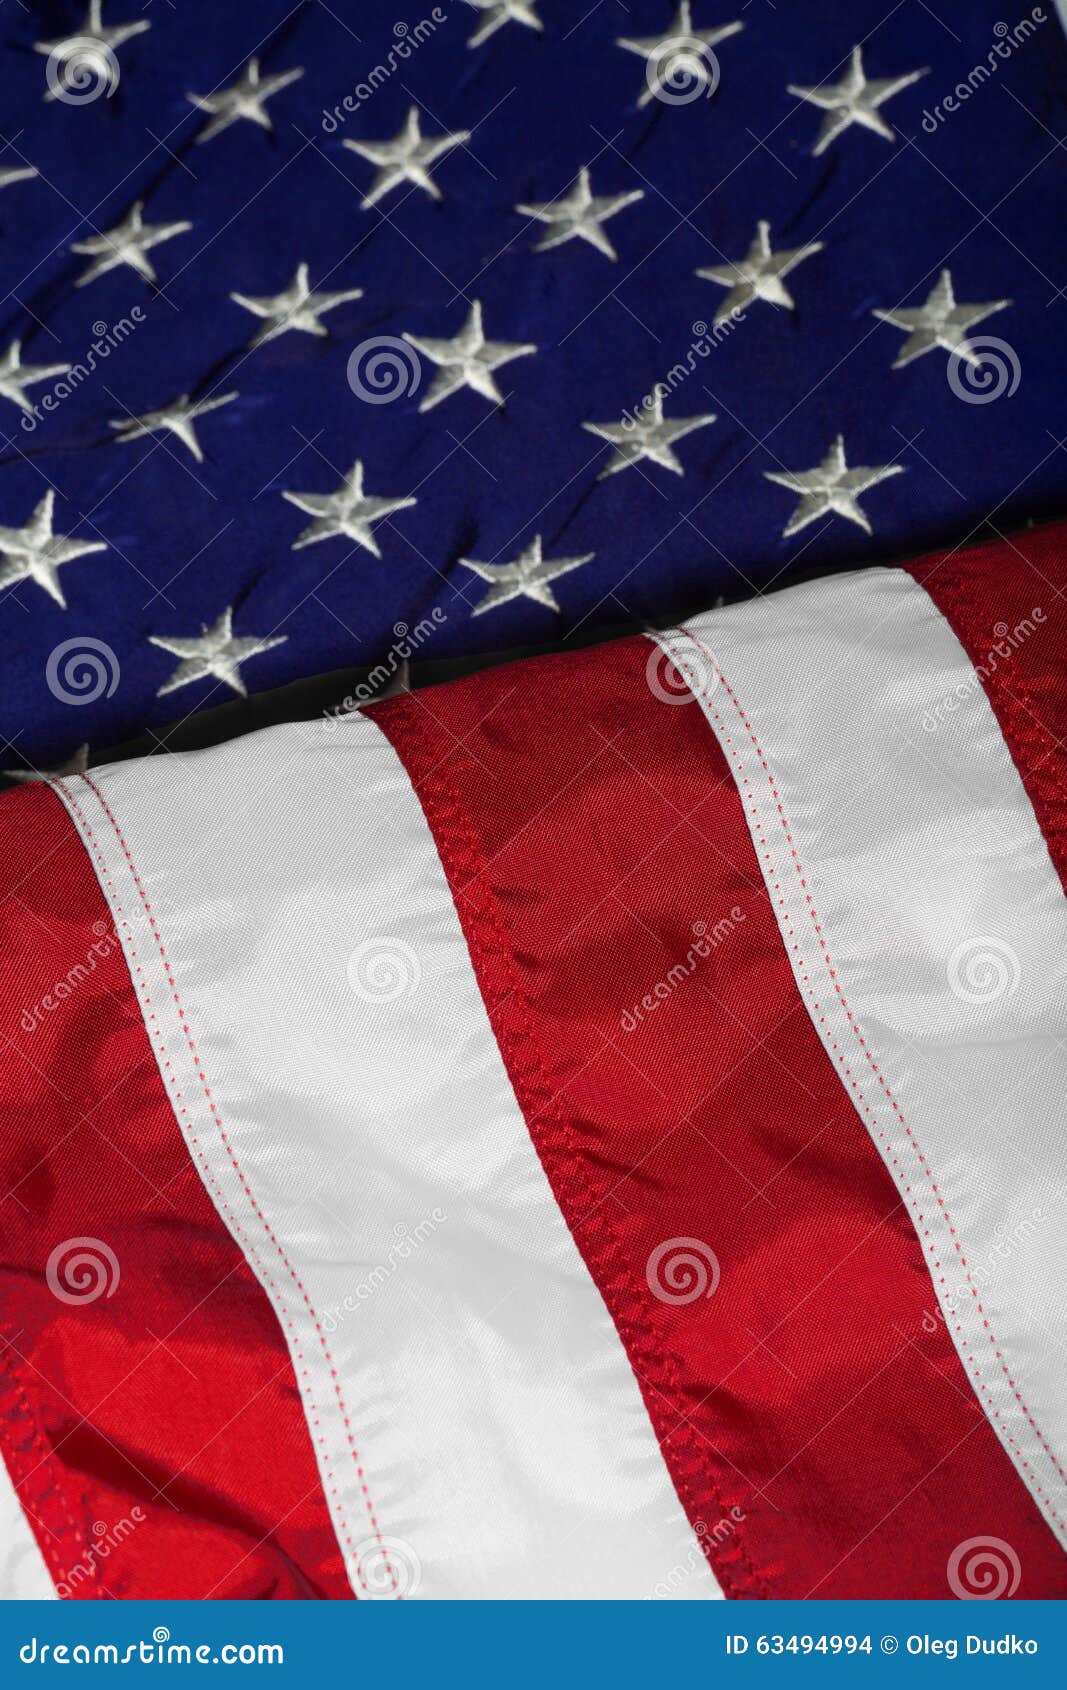 3D iPhone Wallpaper on Twitter American Flag Wallpaper iPhone  httpstcoH4LEPVLi3I httpstcoMuKP52MIIq  Twitter